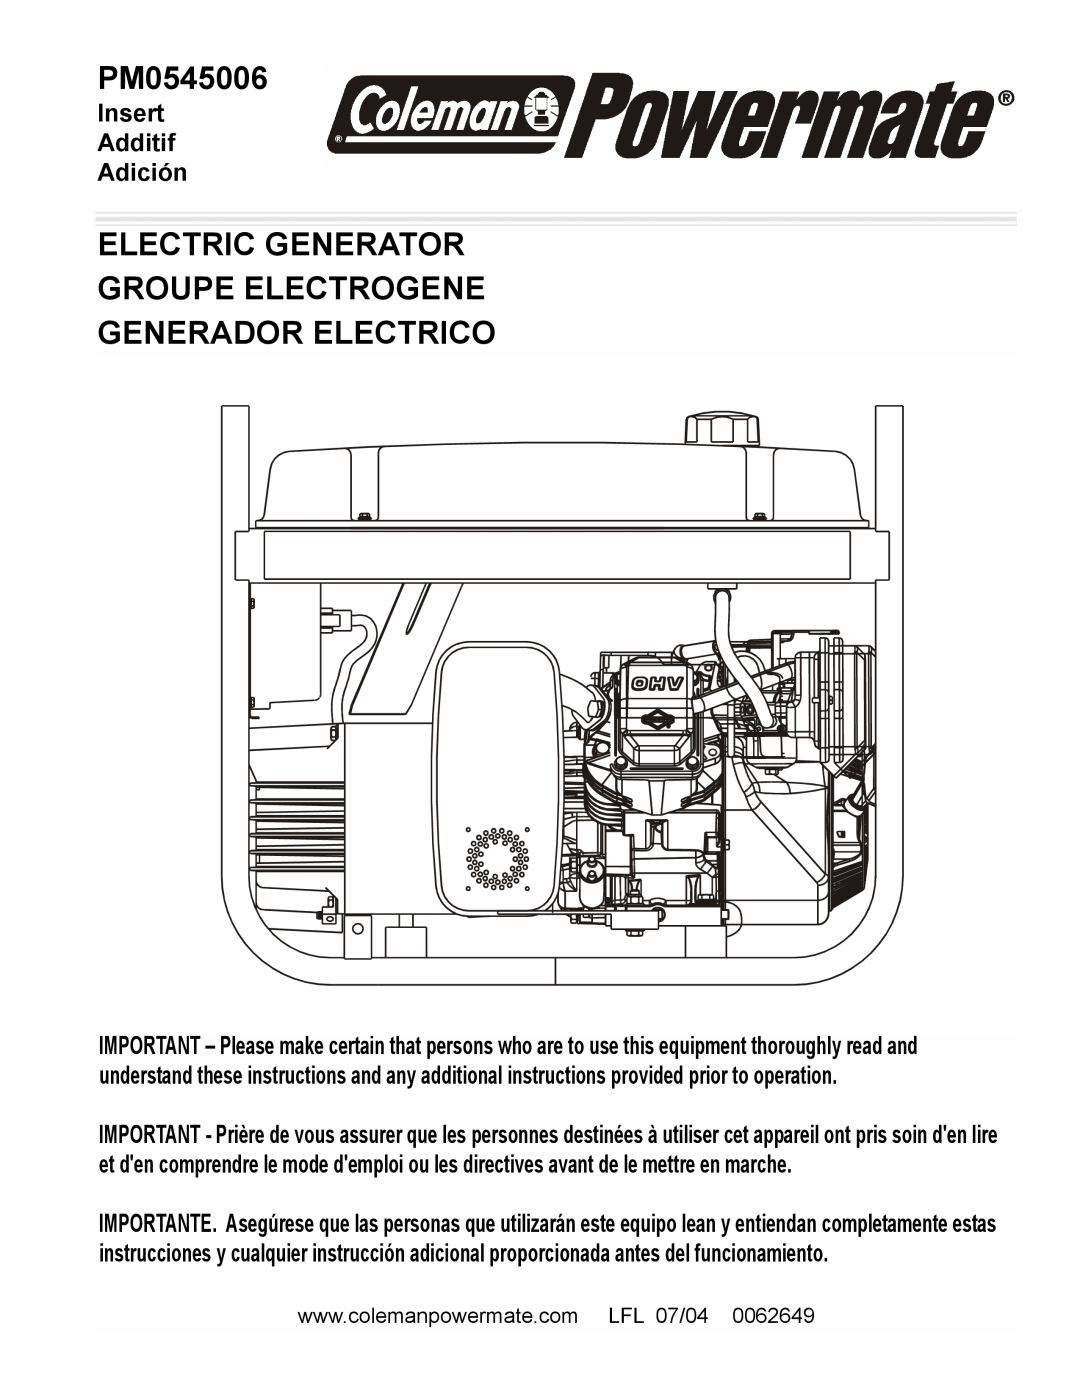 Powermate PM0545006 manual Electric Generator Groupe Electrogene, Generador Electrico, Insert Additif Adición 